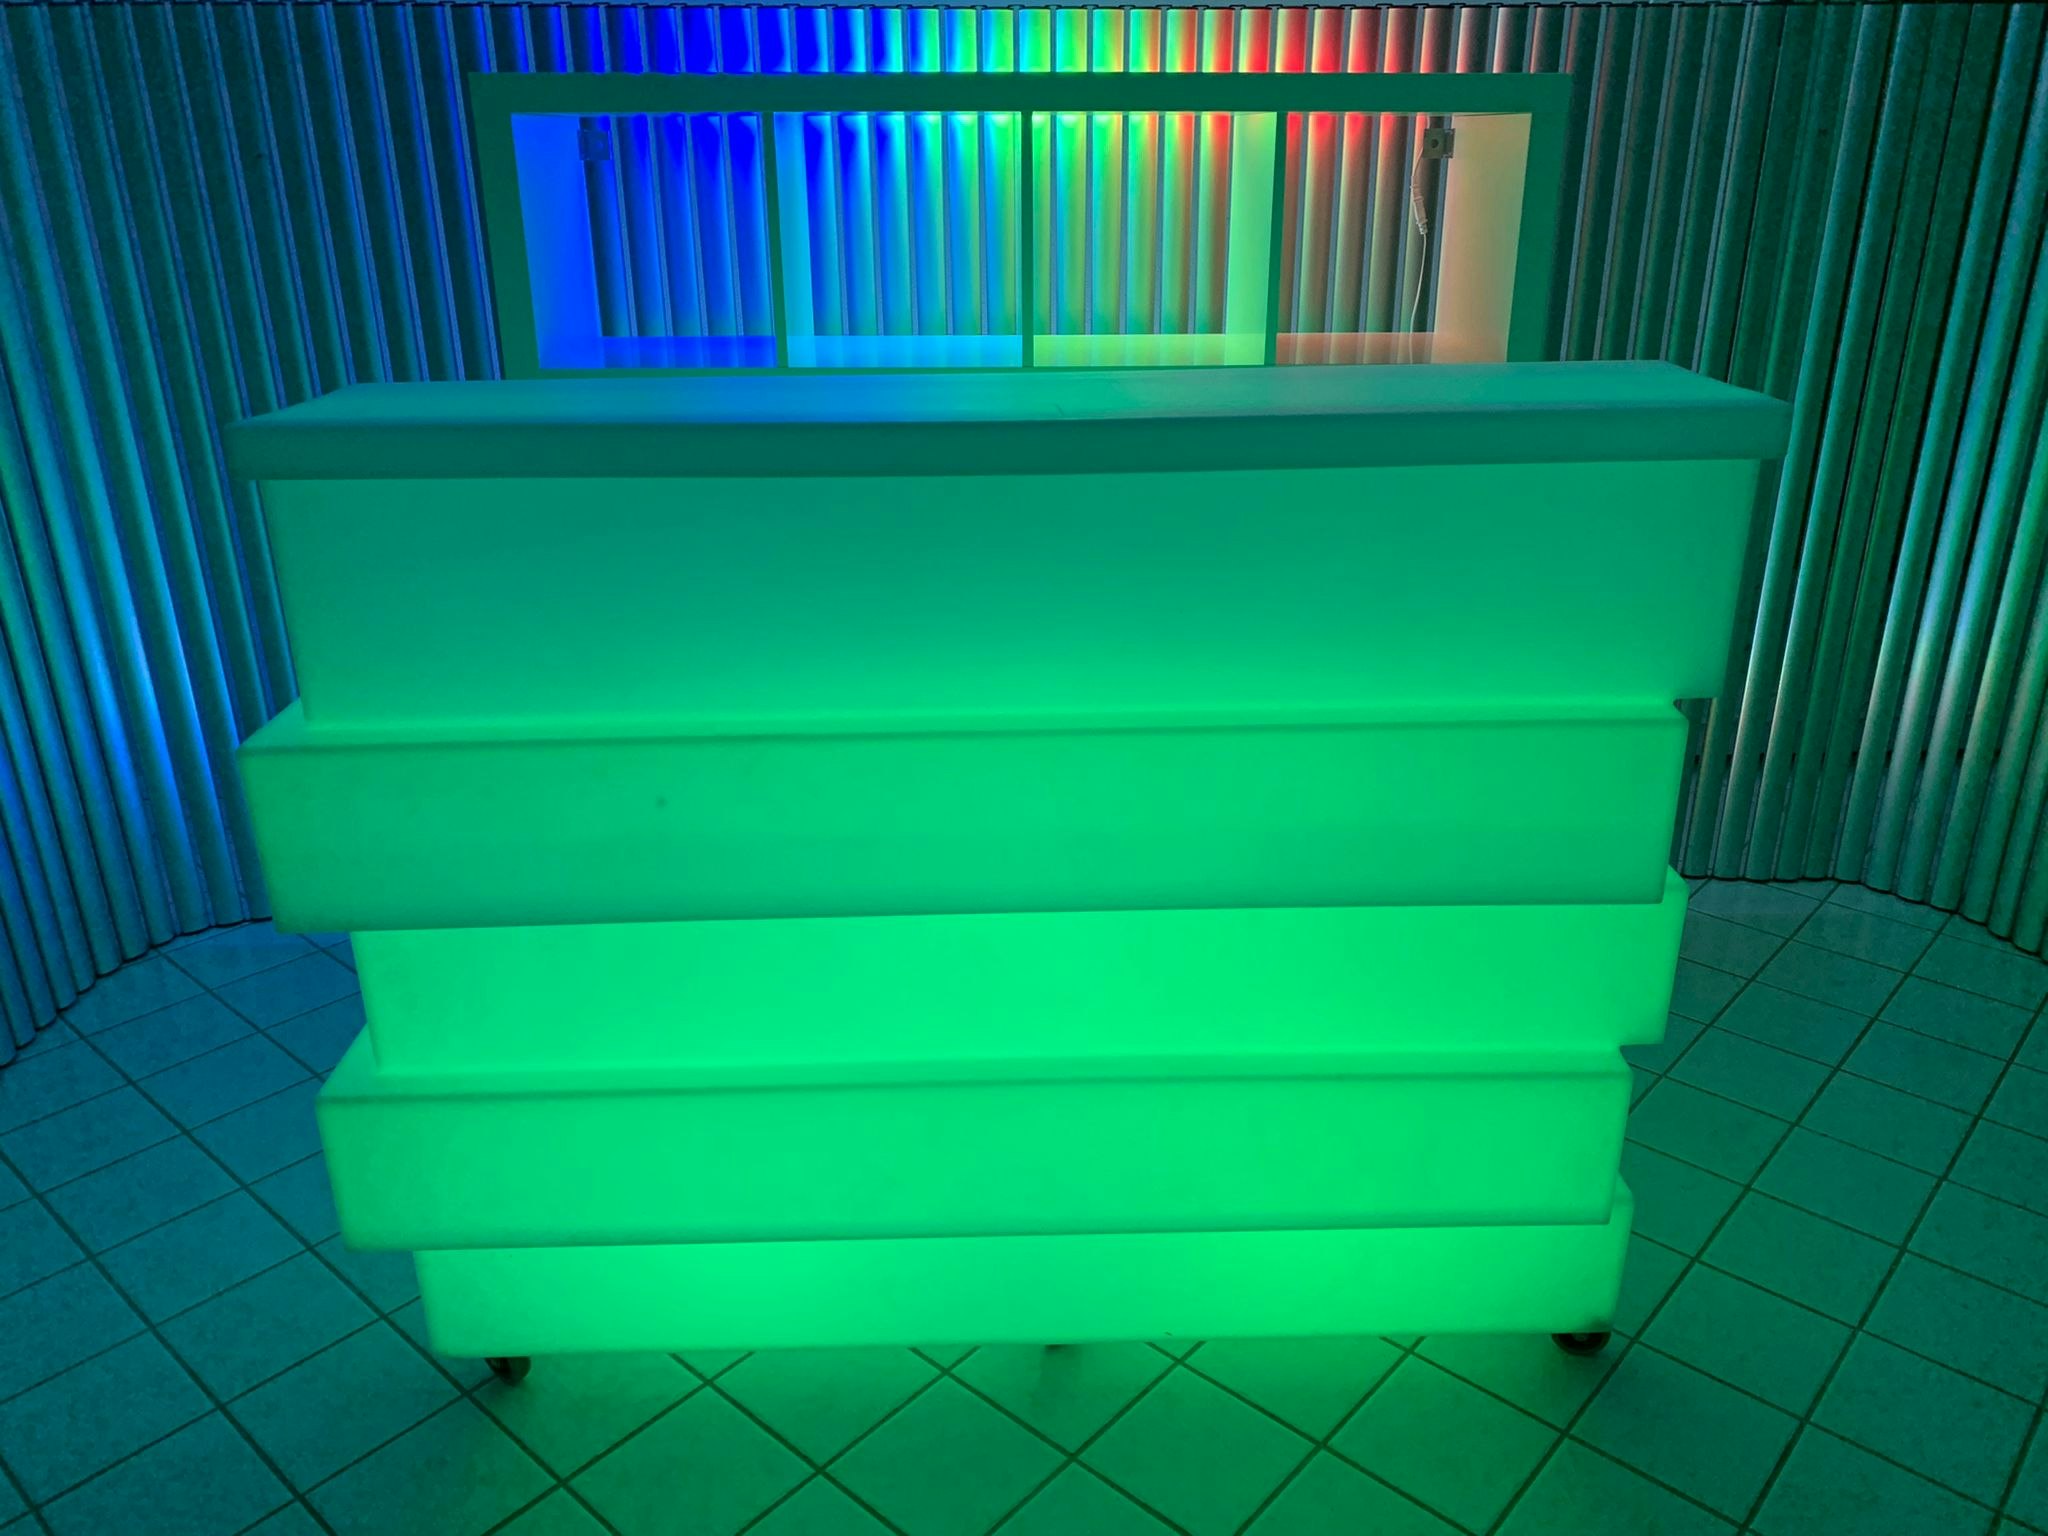 Hyr Pedrali Tetris bardisk med iskylare - Uppladdningsbar Multi LED